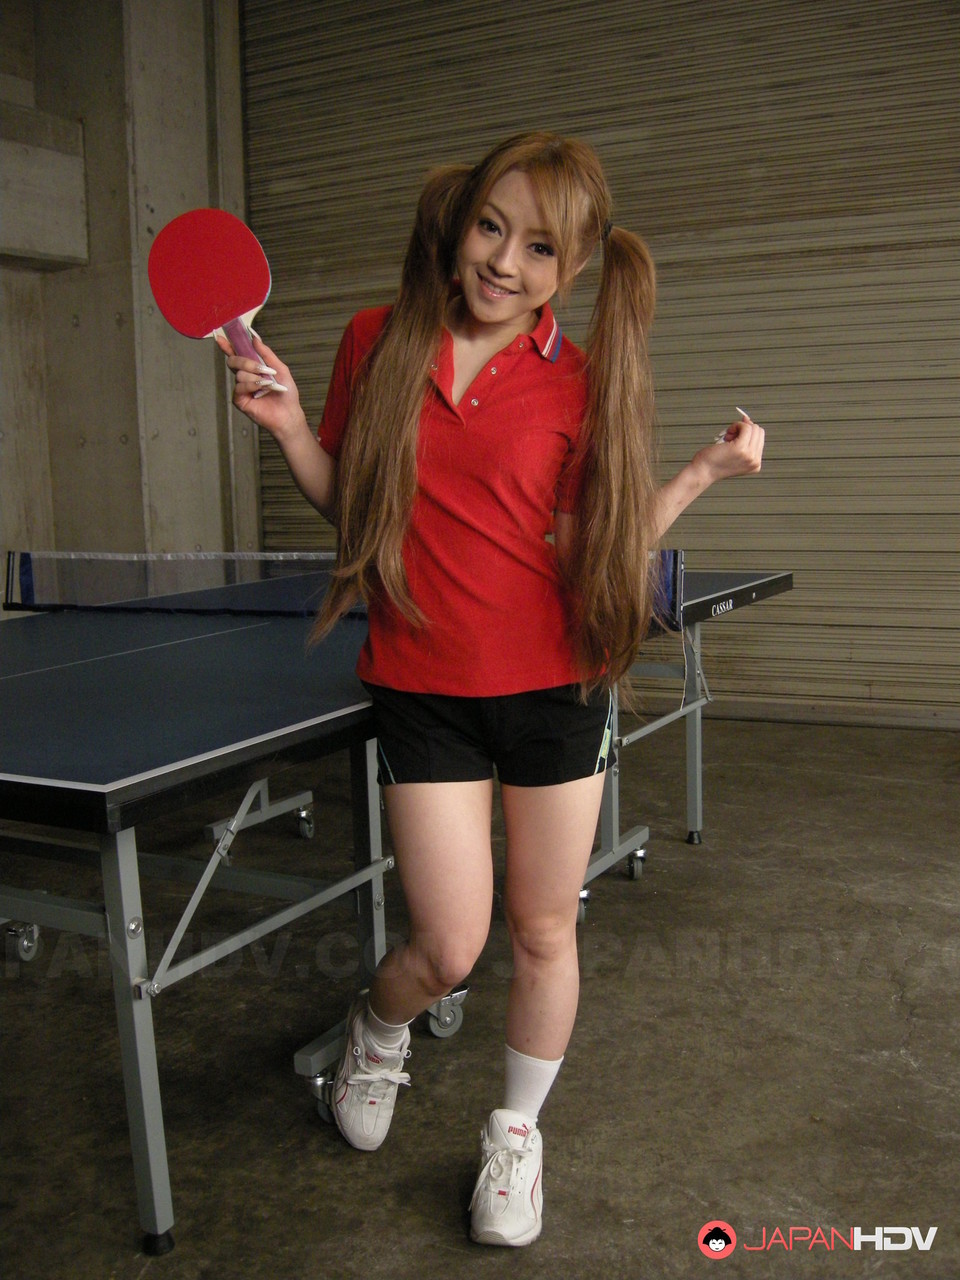 Japanese table tennis player Ria Sakurai gets face fucked by her coach porn photo #426550941 | Japan HDV Pics, Ria Sakurai, Japanese, mobile porn